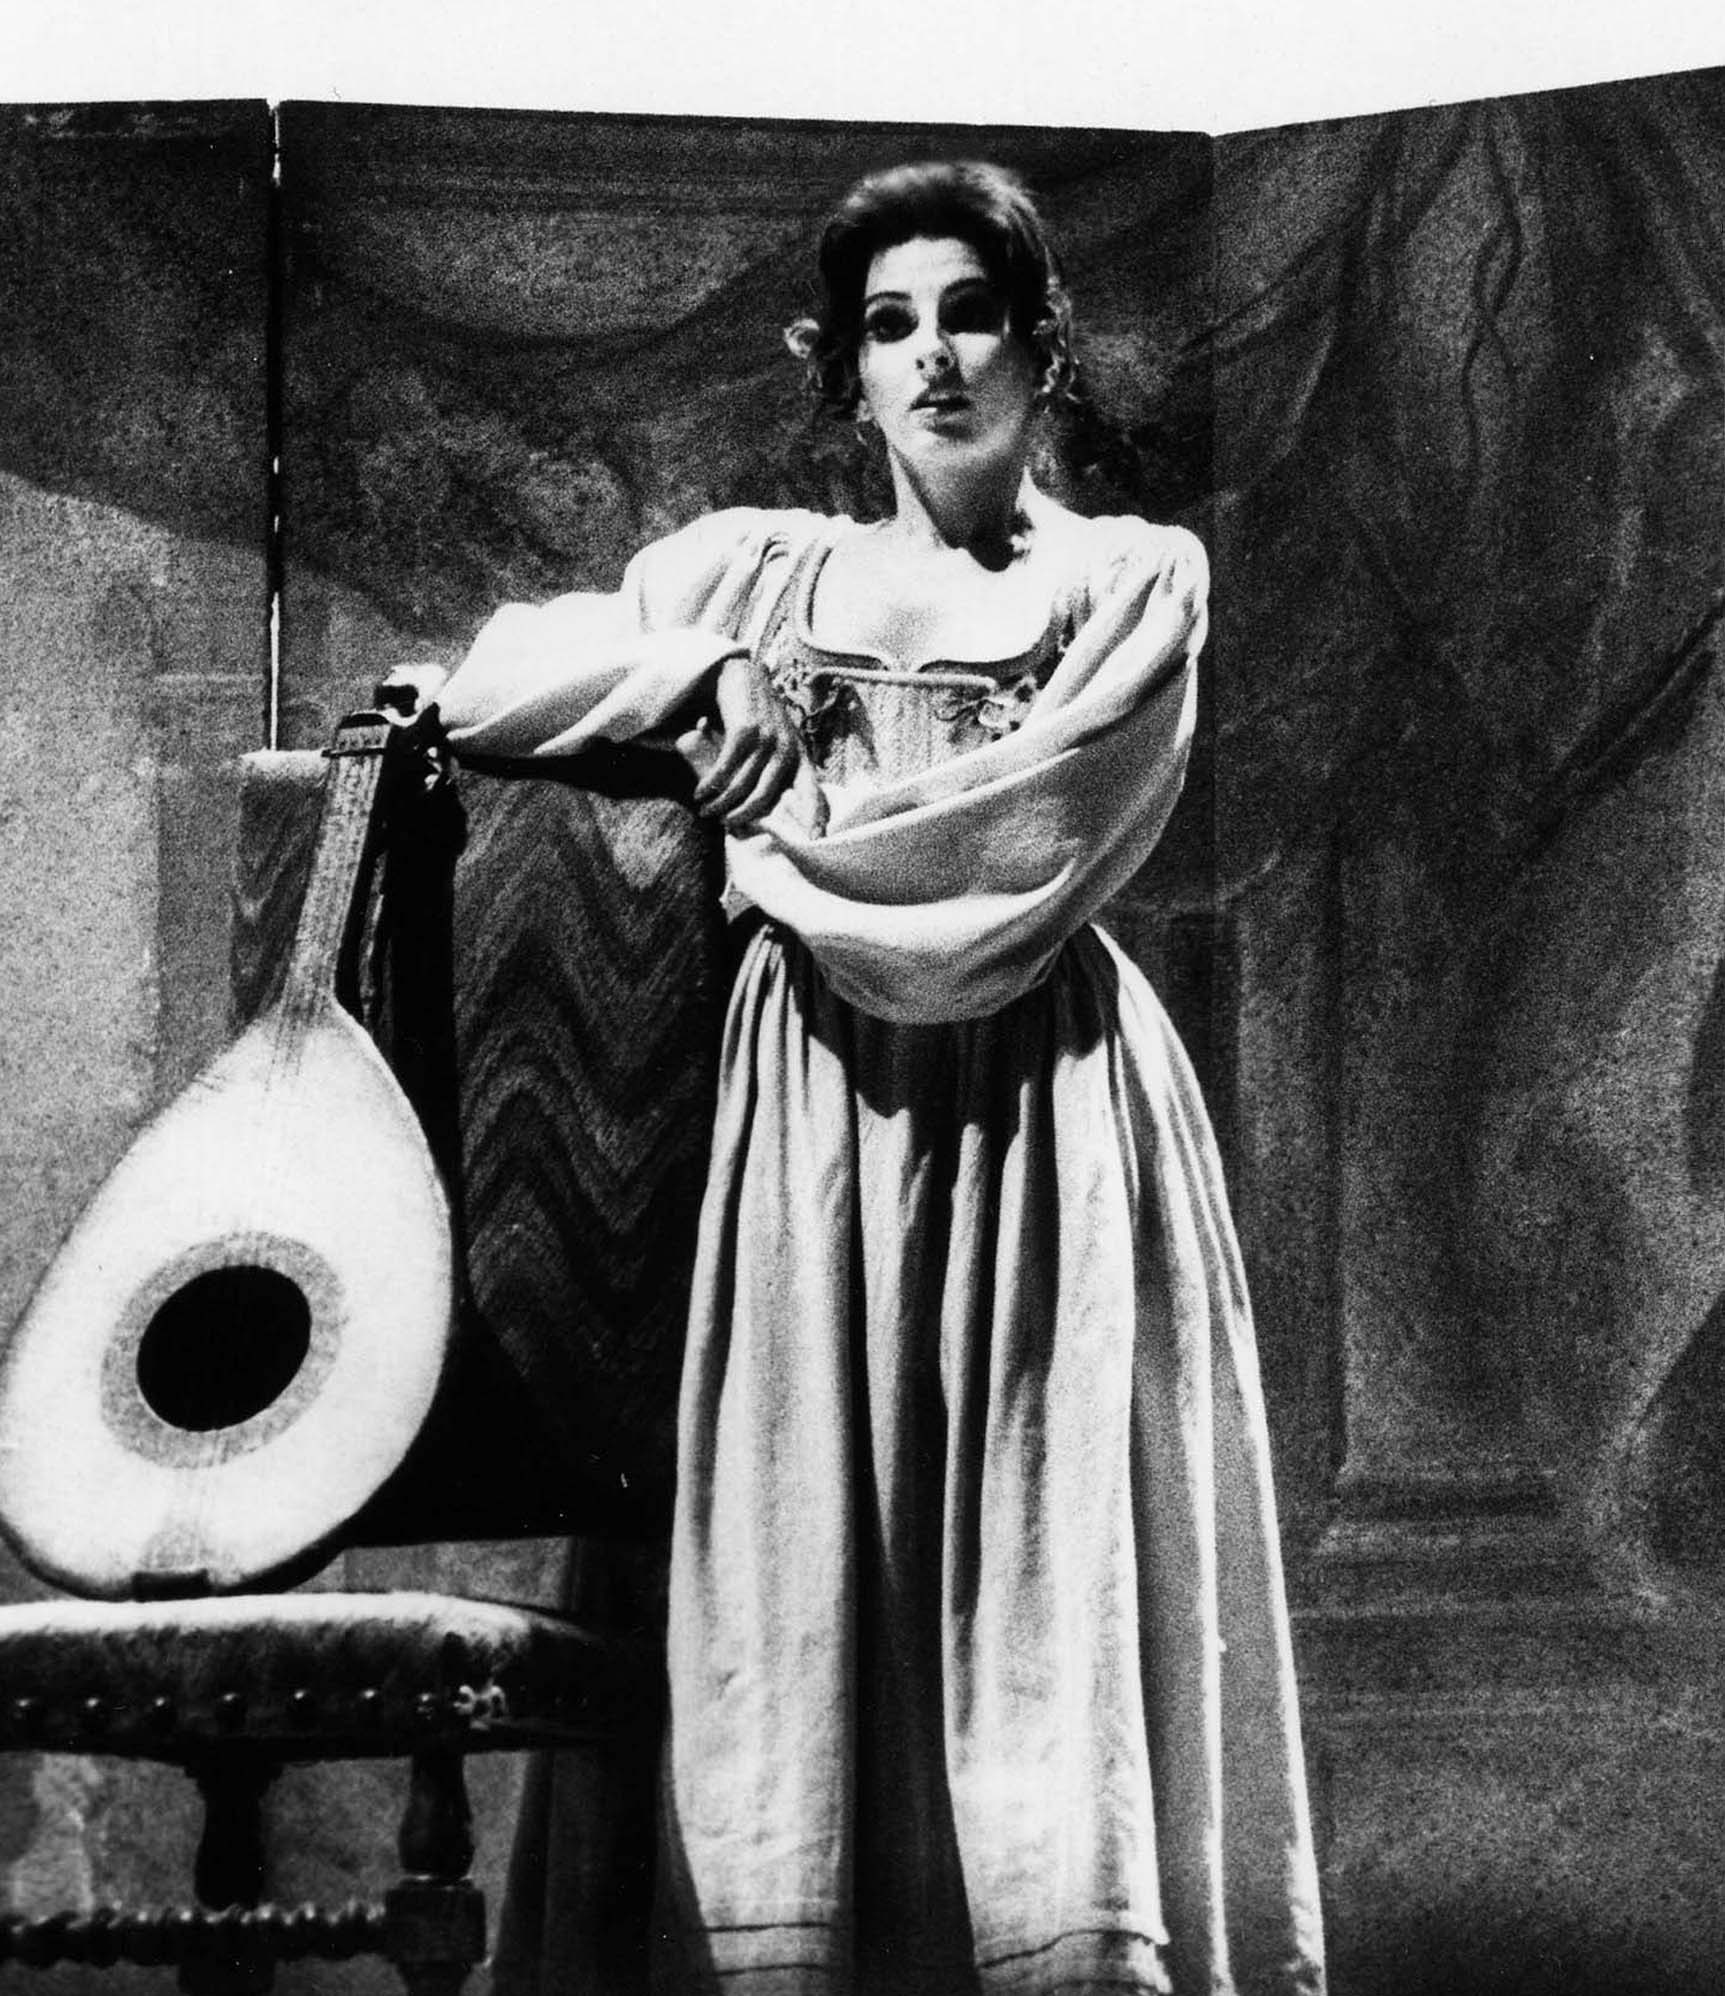 Lucia Aliberti⚘Teatro alla Scala⚘Milan⚘Opera⚘"Falstaff"⚘Milan⚘On Stage⚘:http://www.luciaaliberti.it #luciaaliberti #teatroallascala #milan #falstaff #opera #giorgiostrehler #lorinmaazel #onstage